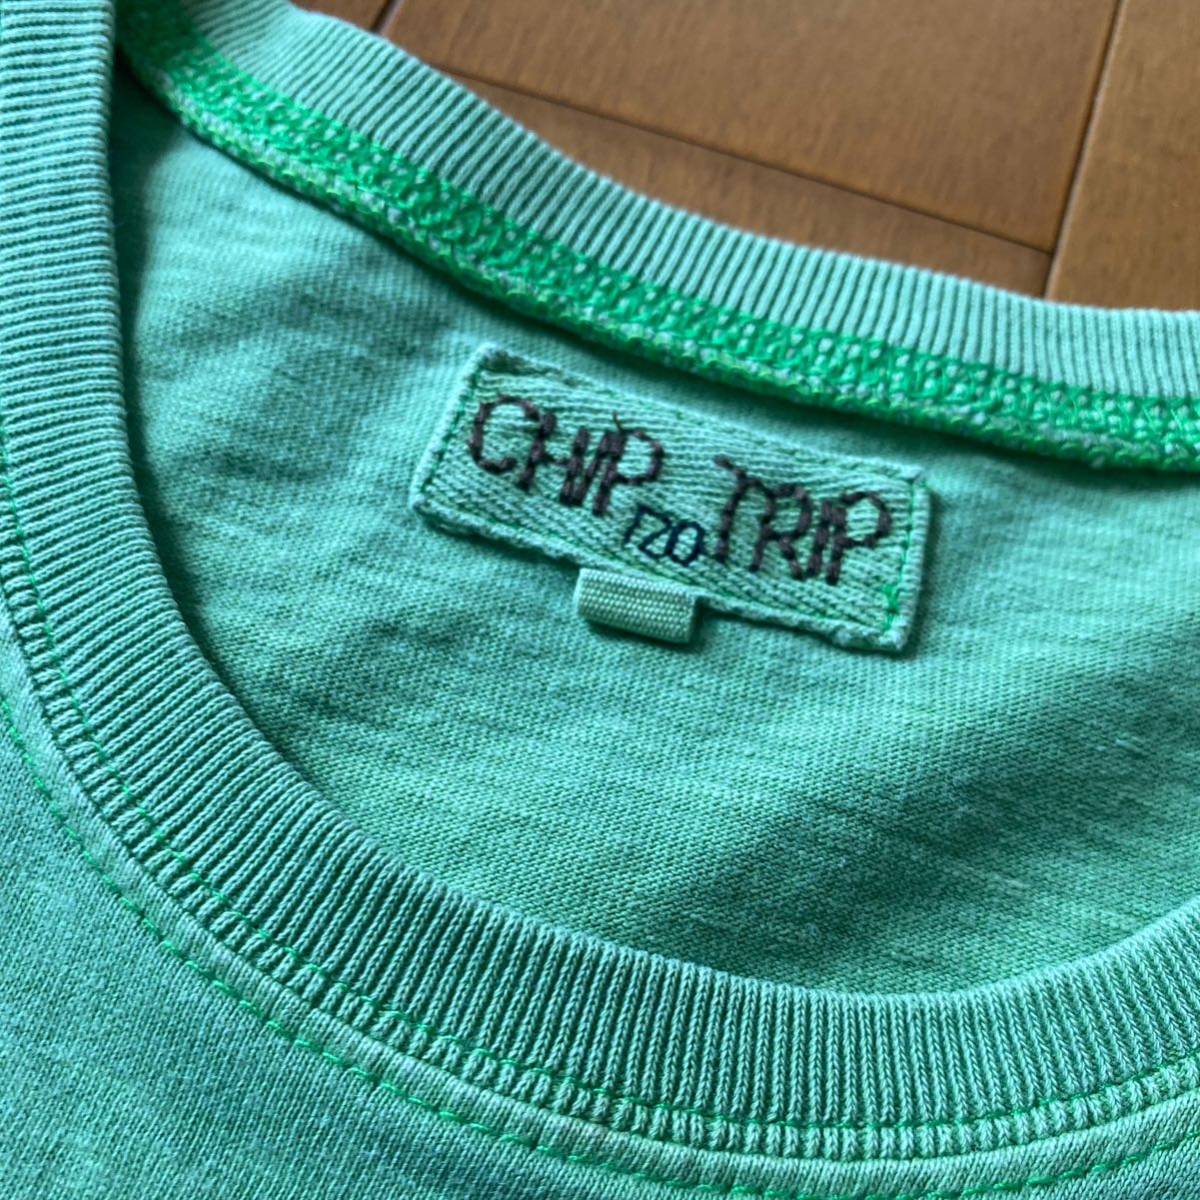 ★ CHIP TRIP ★ チップトリップ Tシャツ 半袖 / レース 刺繍 グリーン 120_画像3